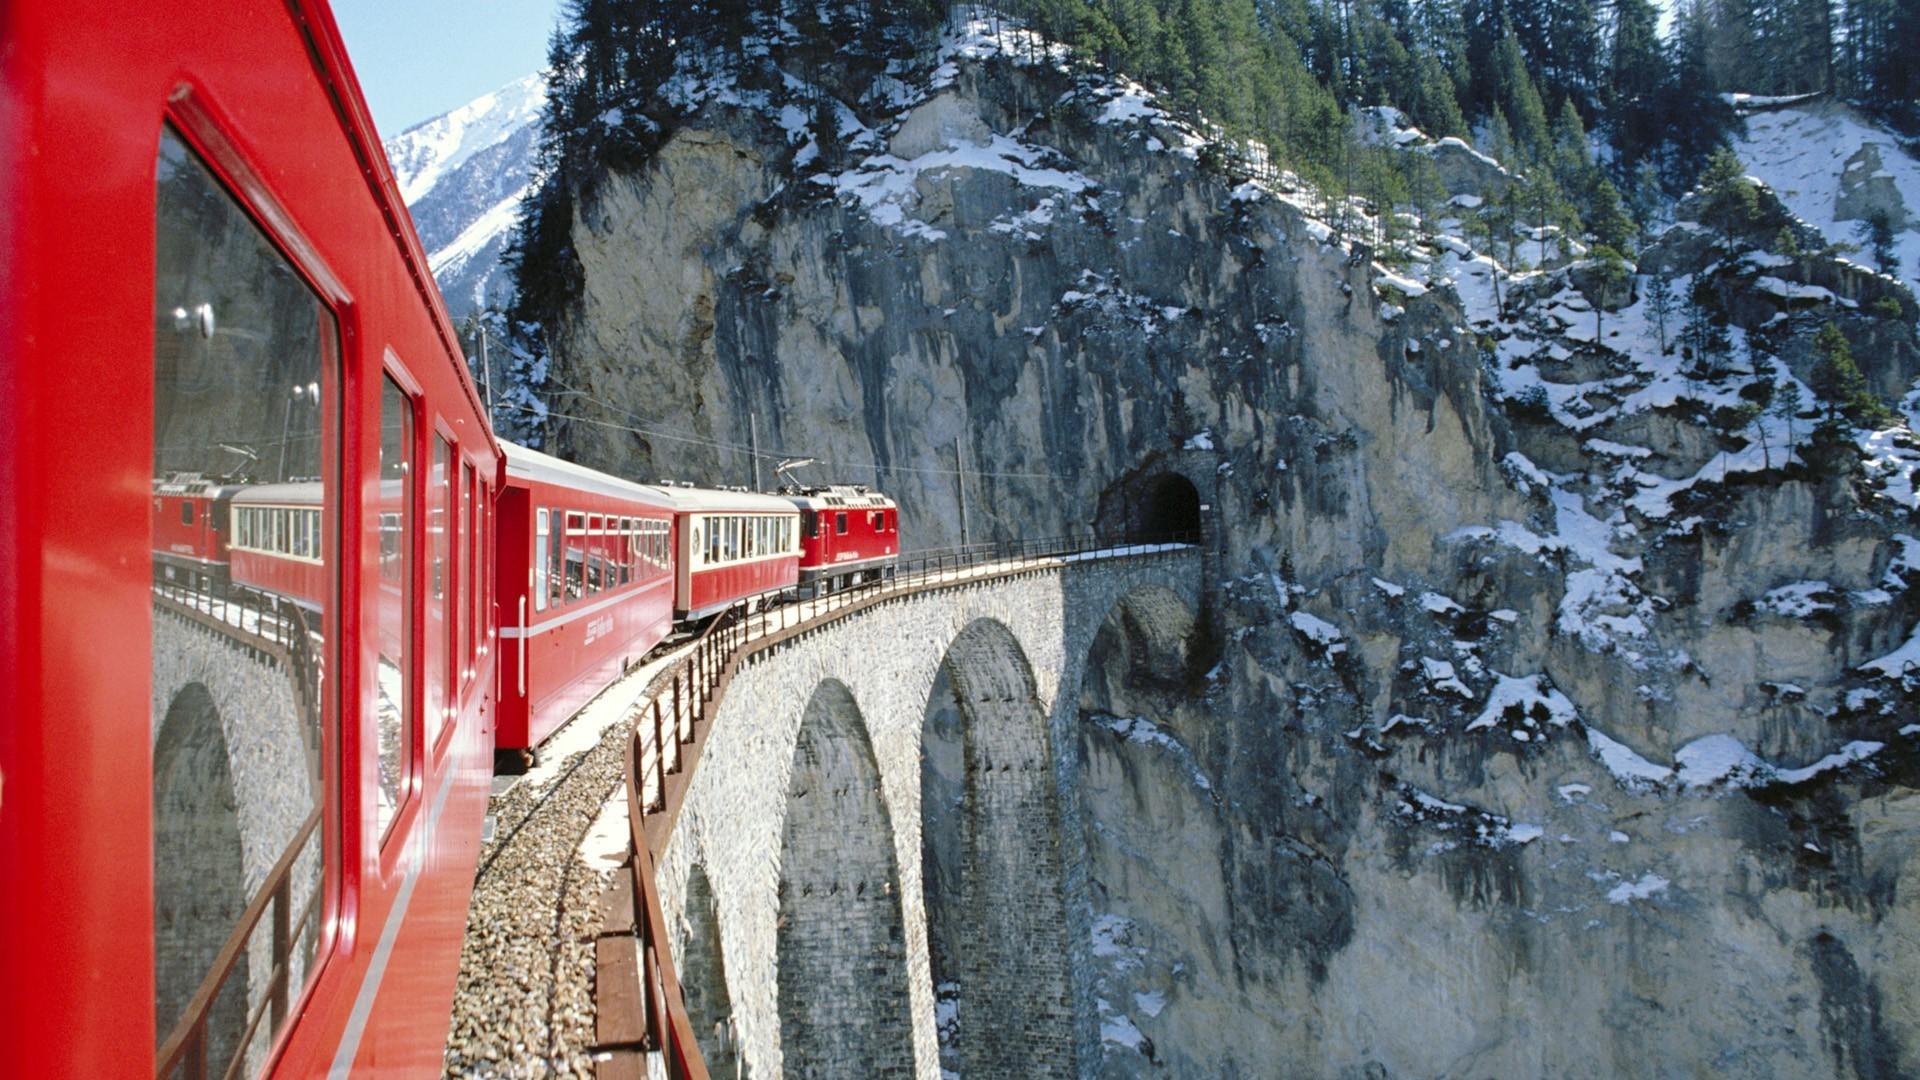 #bridge, #railway, #Switzerland, #train, #snow, #winter